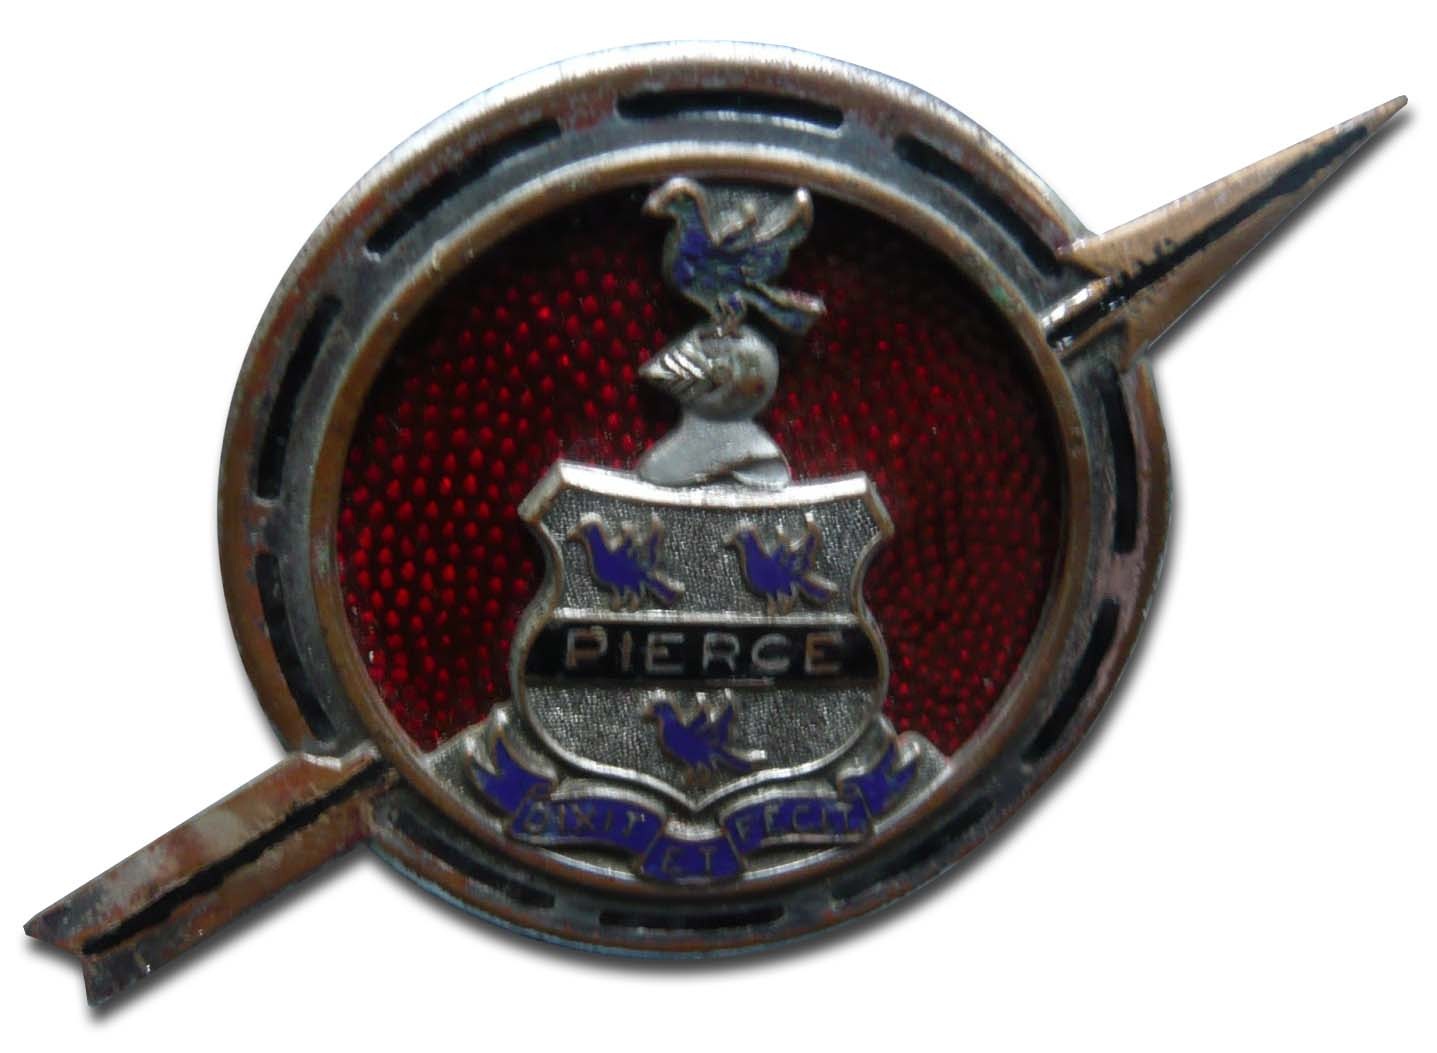 1936. Pierce-Arrow (grill emblem)